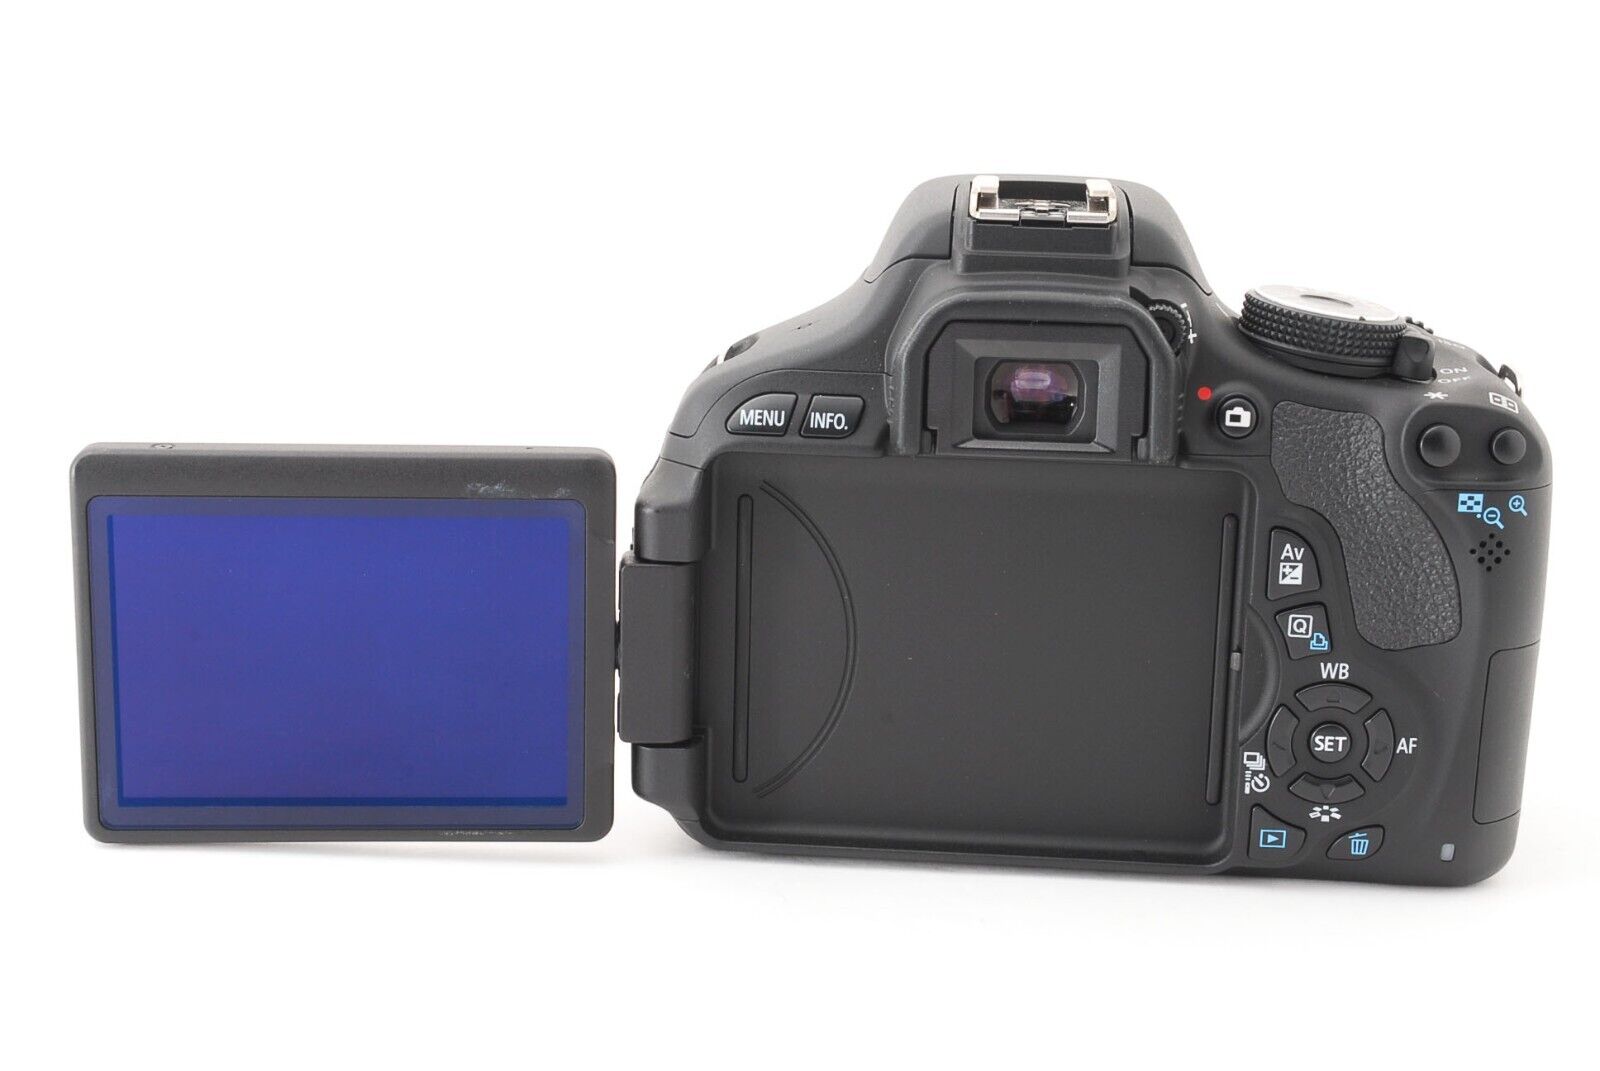 Canon EOS Kiss X5 (Rebel T3i / 600D) w/ 18-55mm&55-200mm Lens